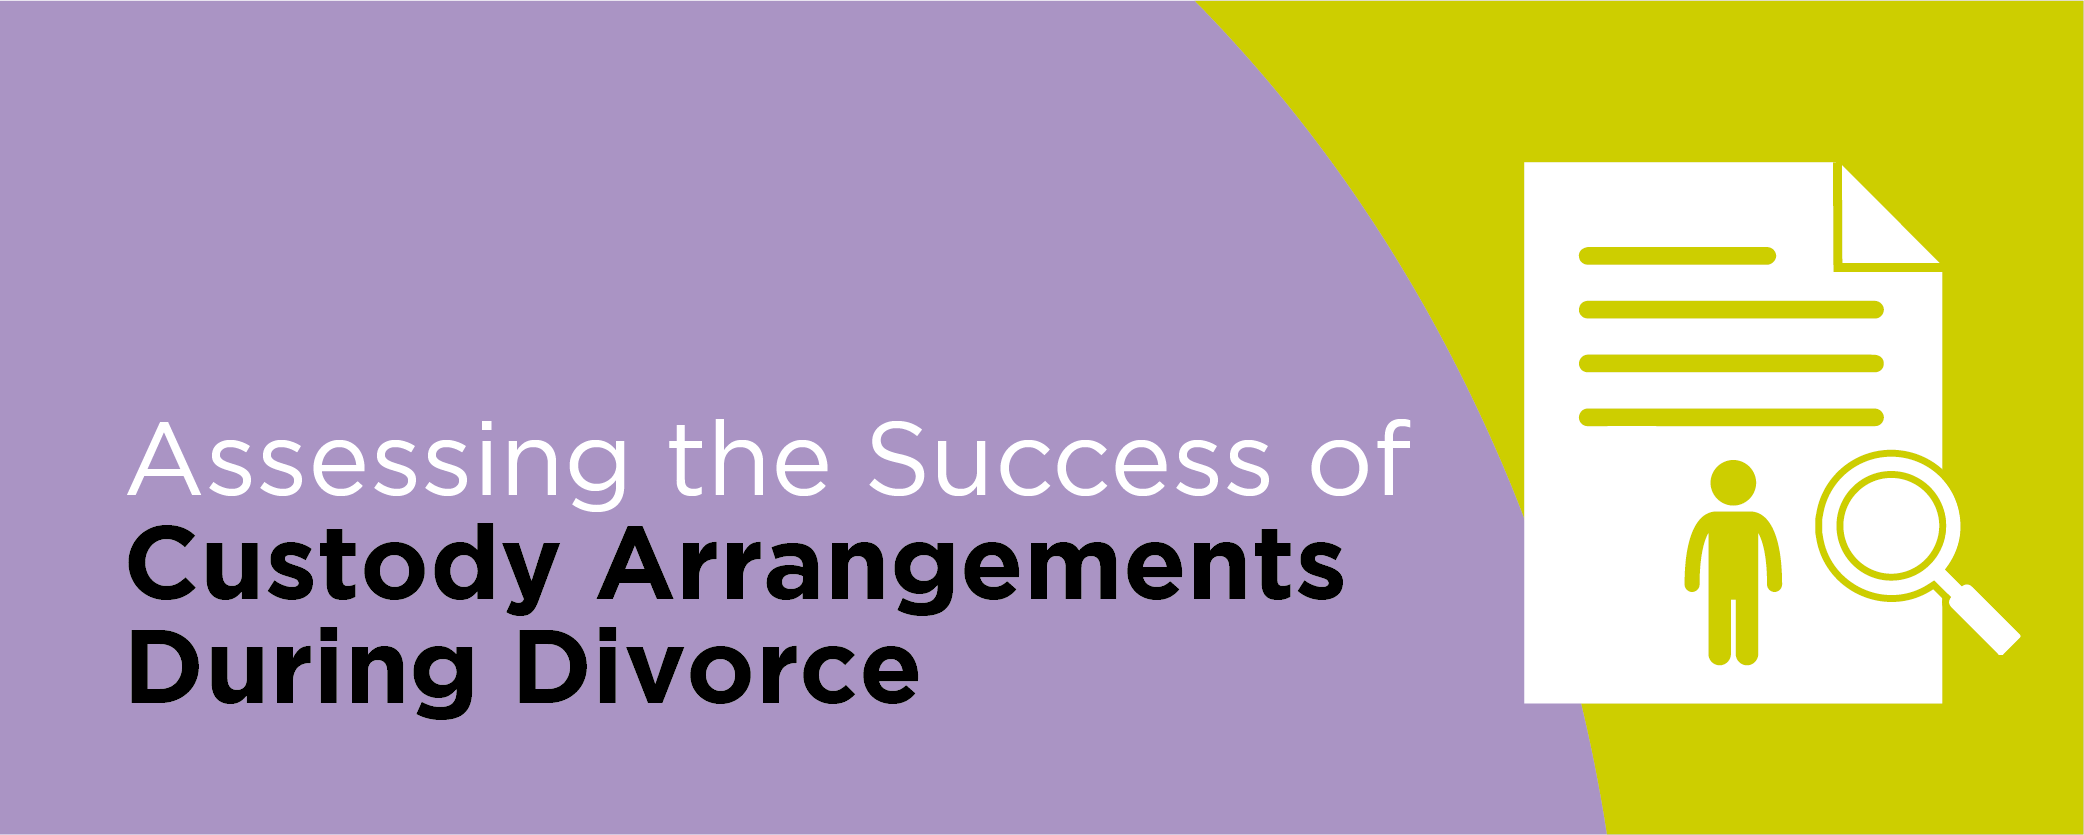 Assessing the Success of Custody Arrangements During Divorce